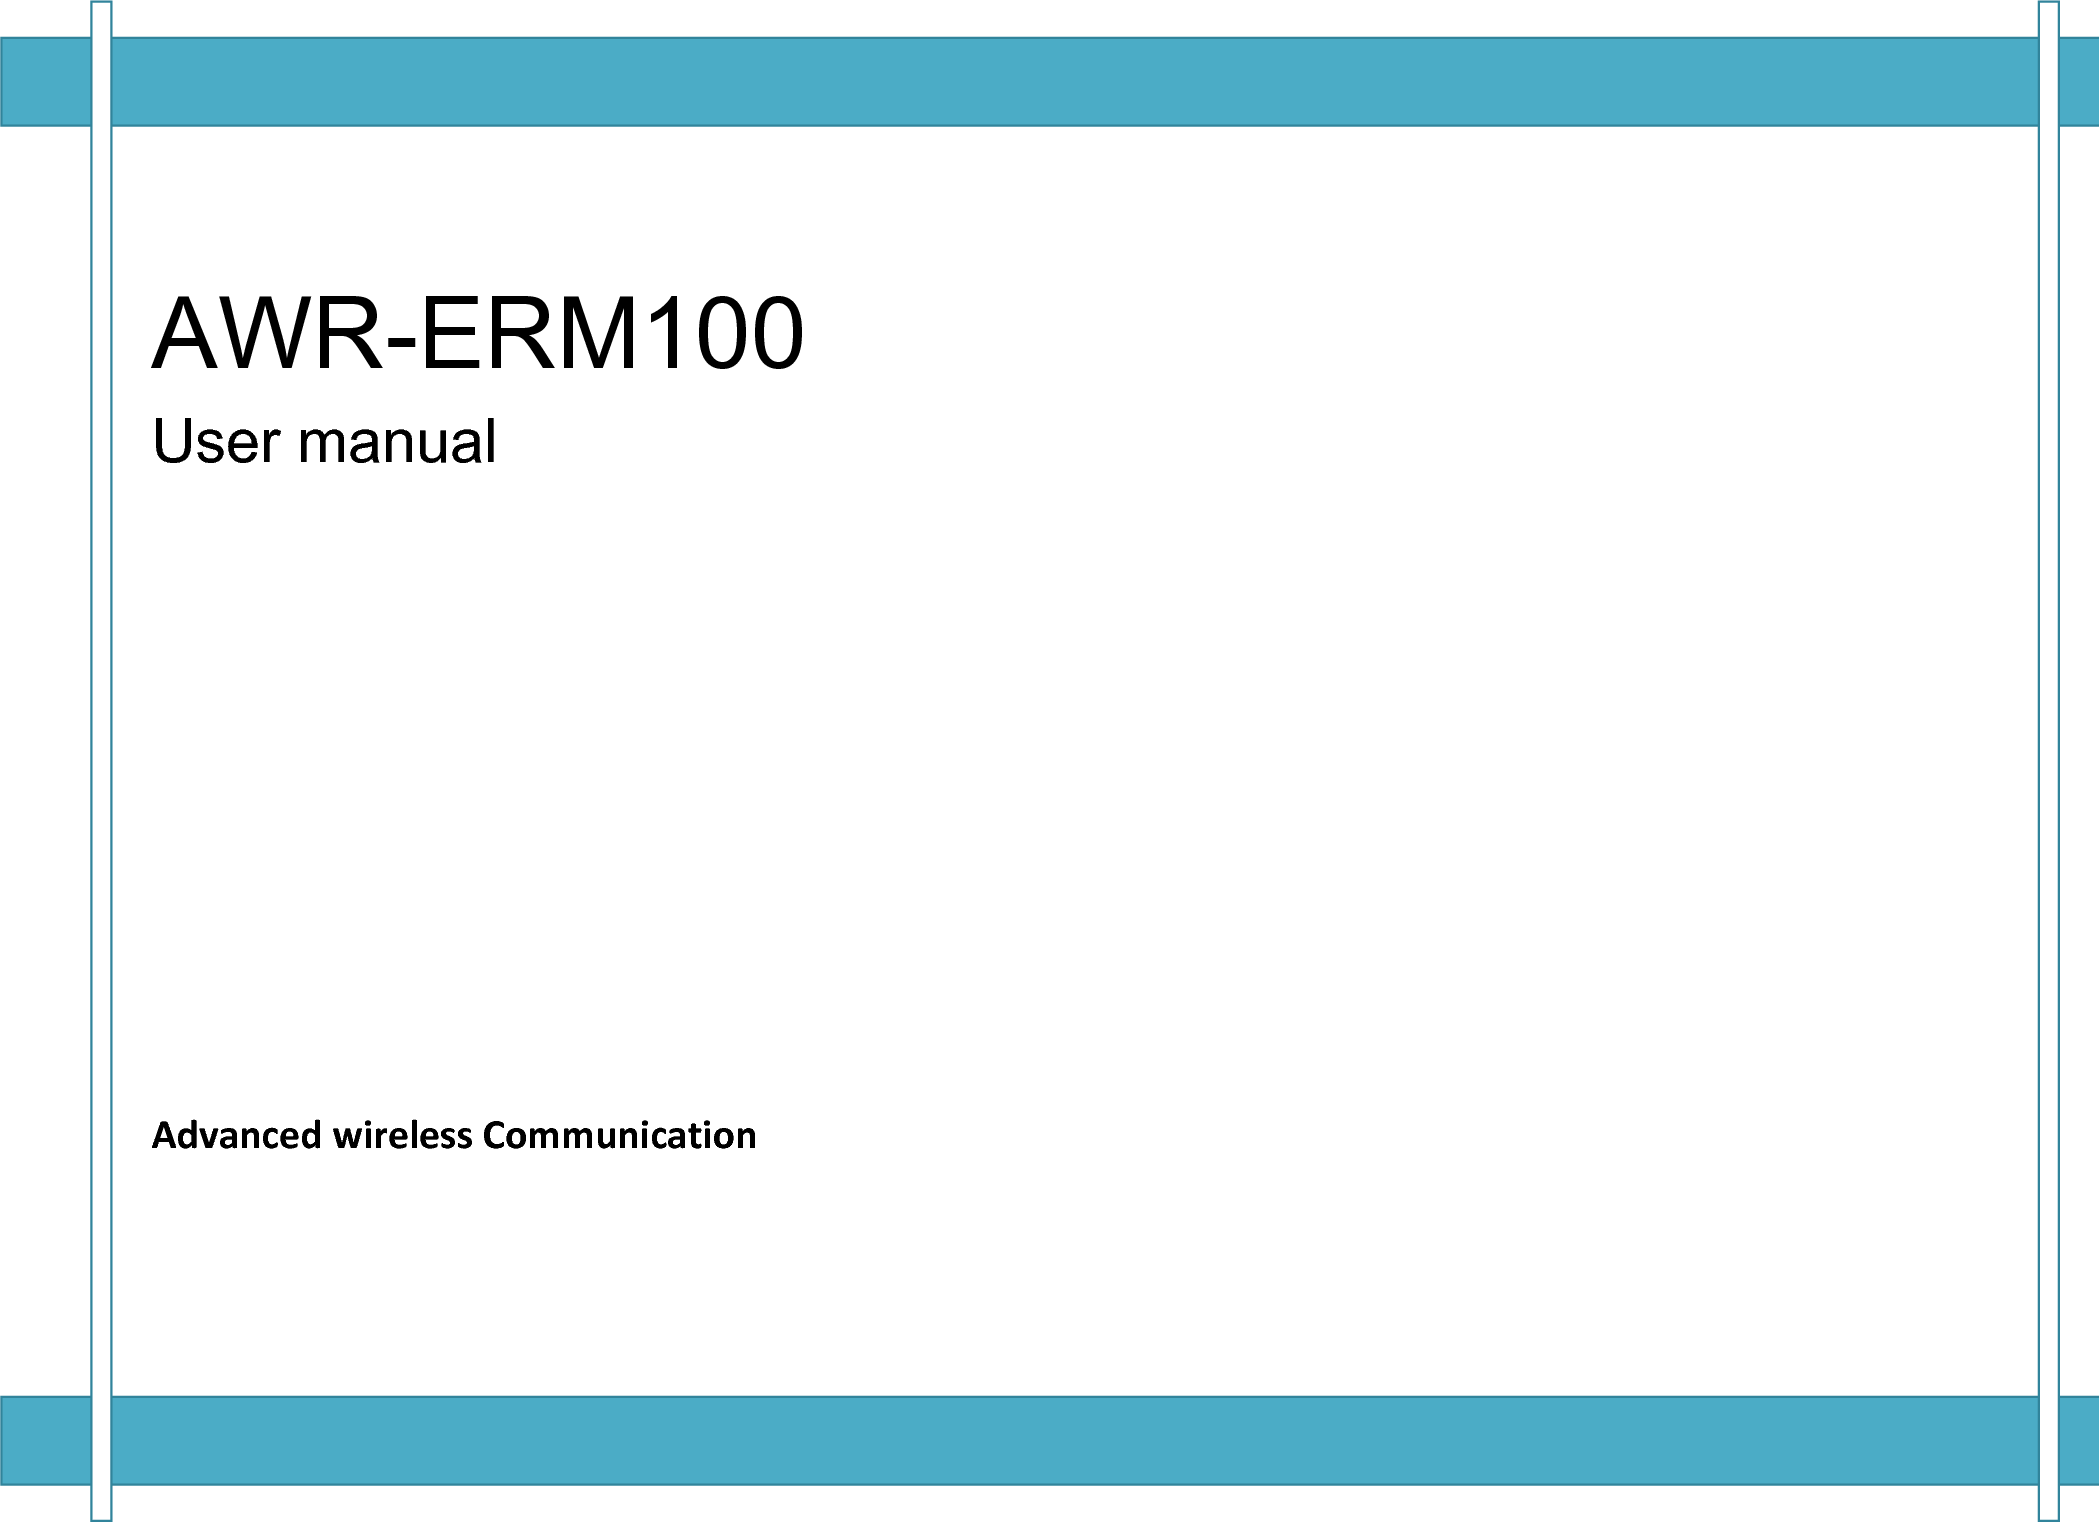  AWR-ERM100 User manual        AdvancedwirelessCommunication 